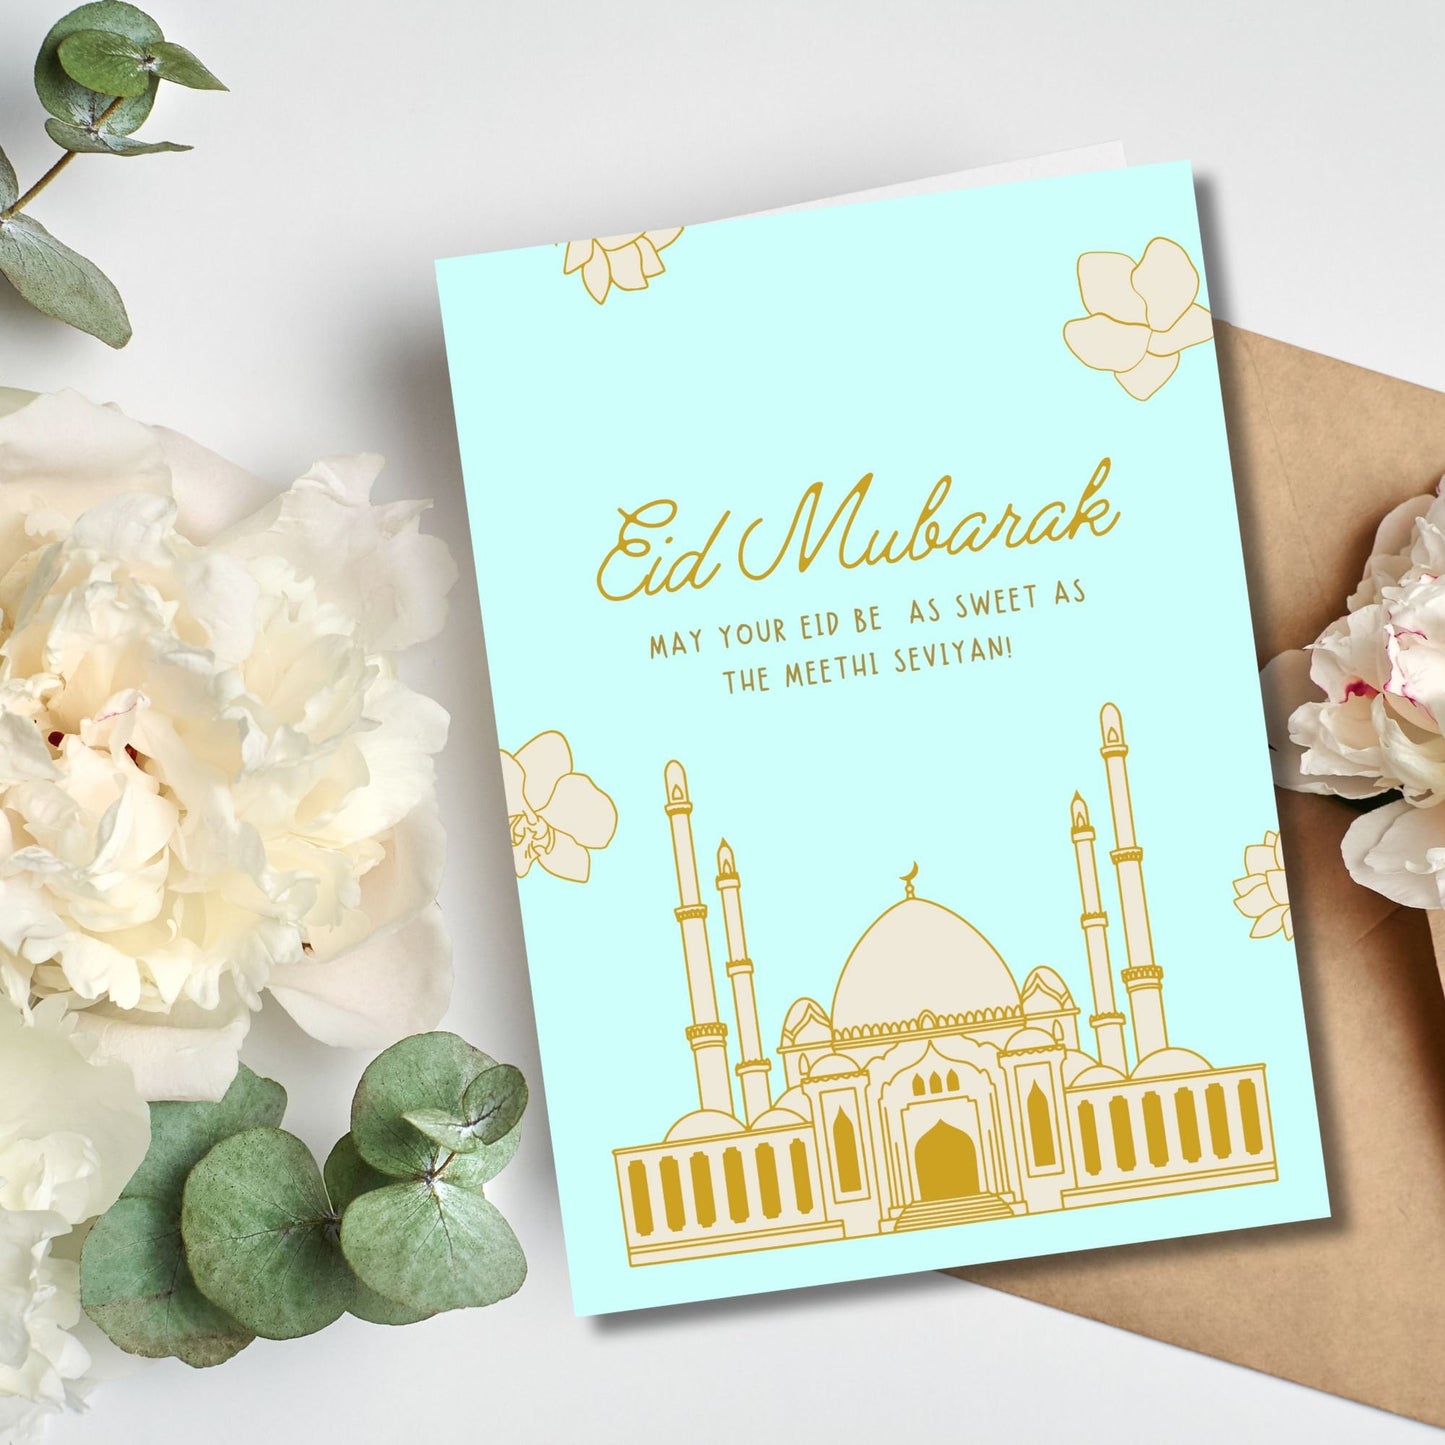 Islamic Greeting Cards, Printable Eid Mubarak Cards, Ramadan Cards, Islamic Arts, Islamic Digital Art, Ramadan Greetings, Ramadan Printable